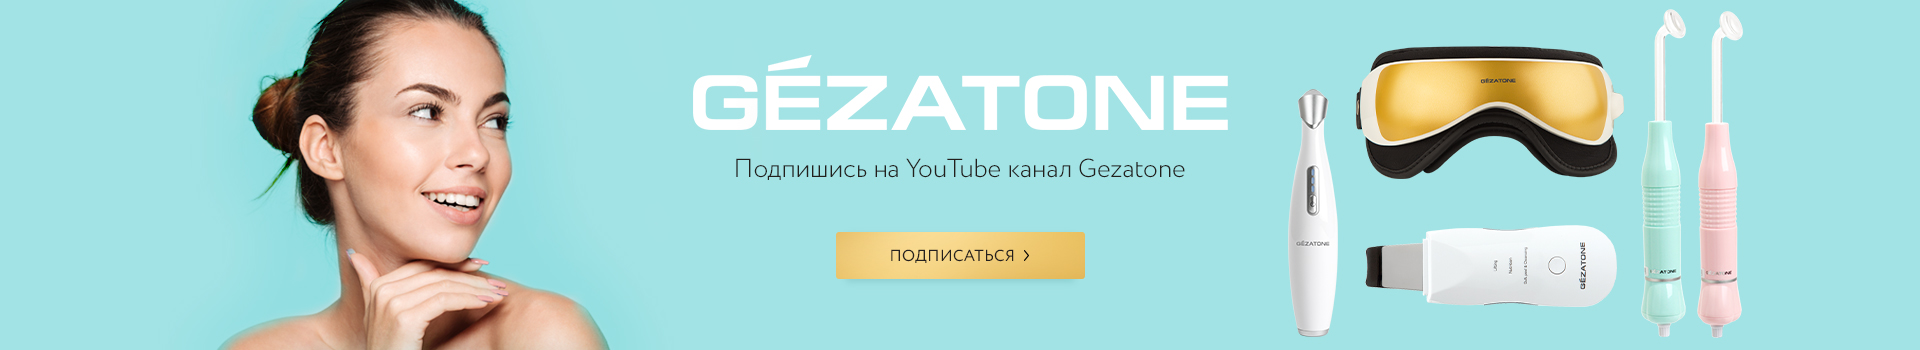 YouTube канал Gezatone